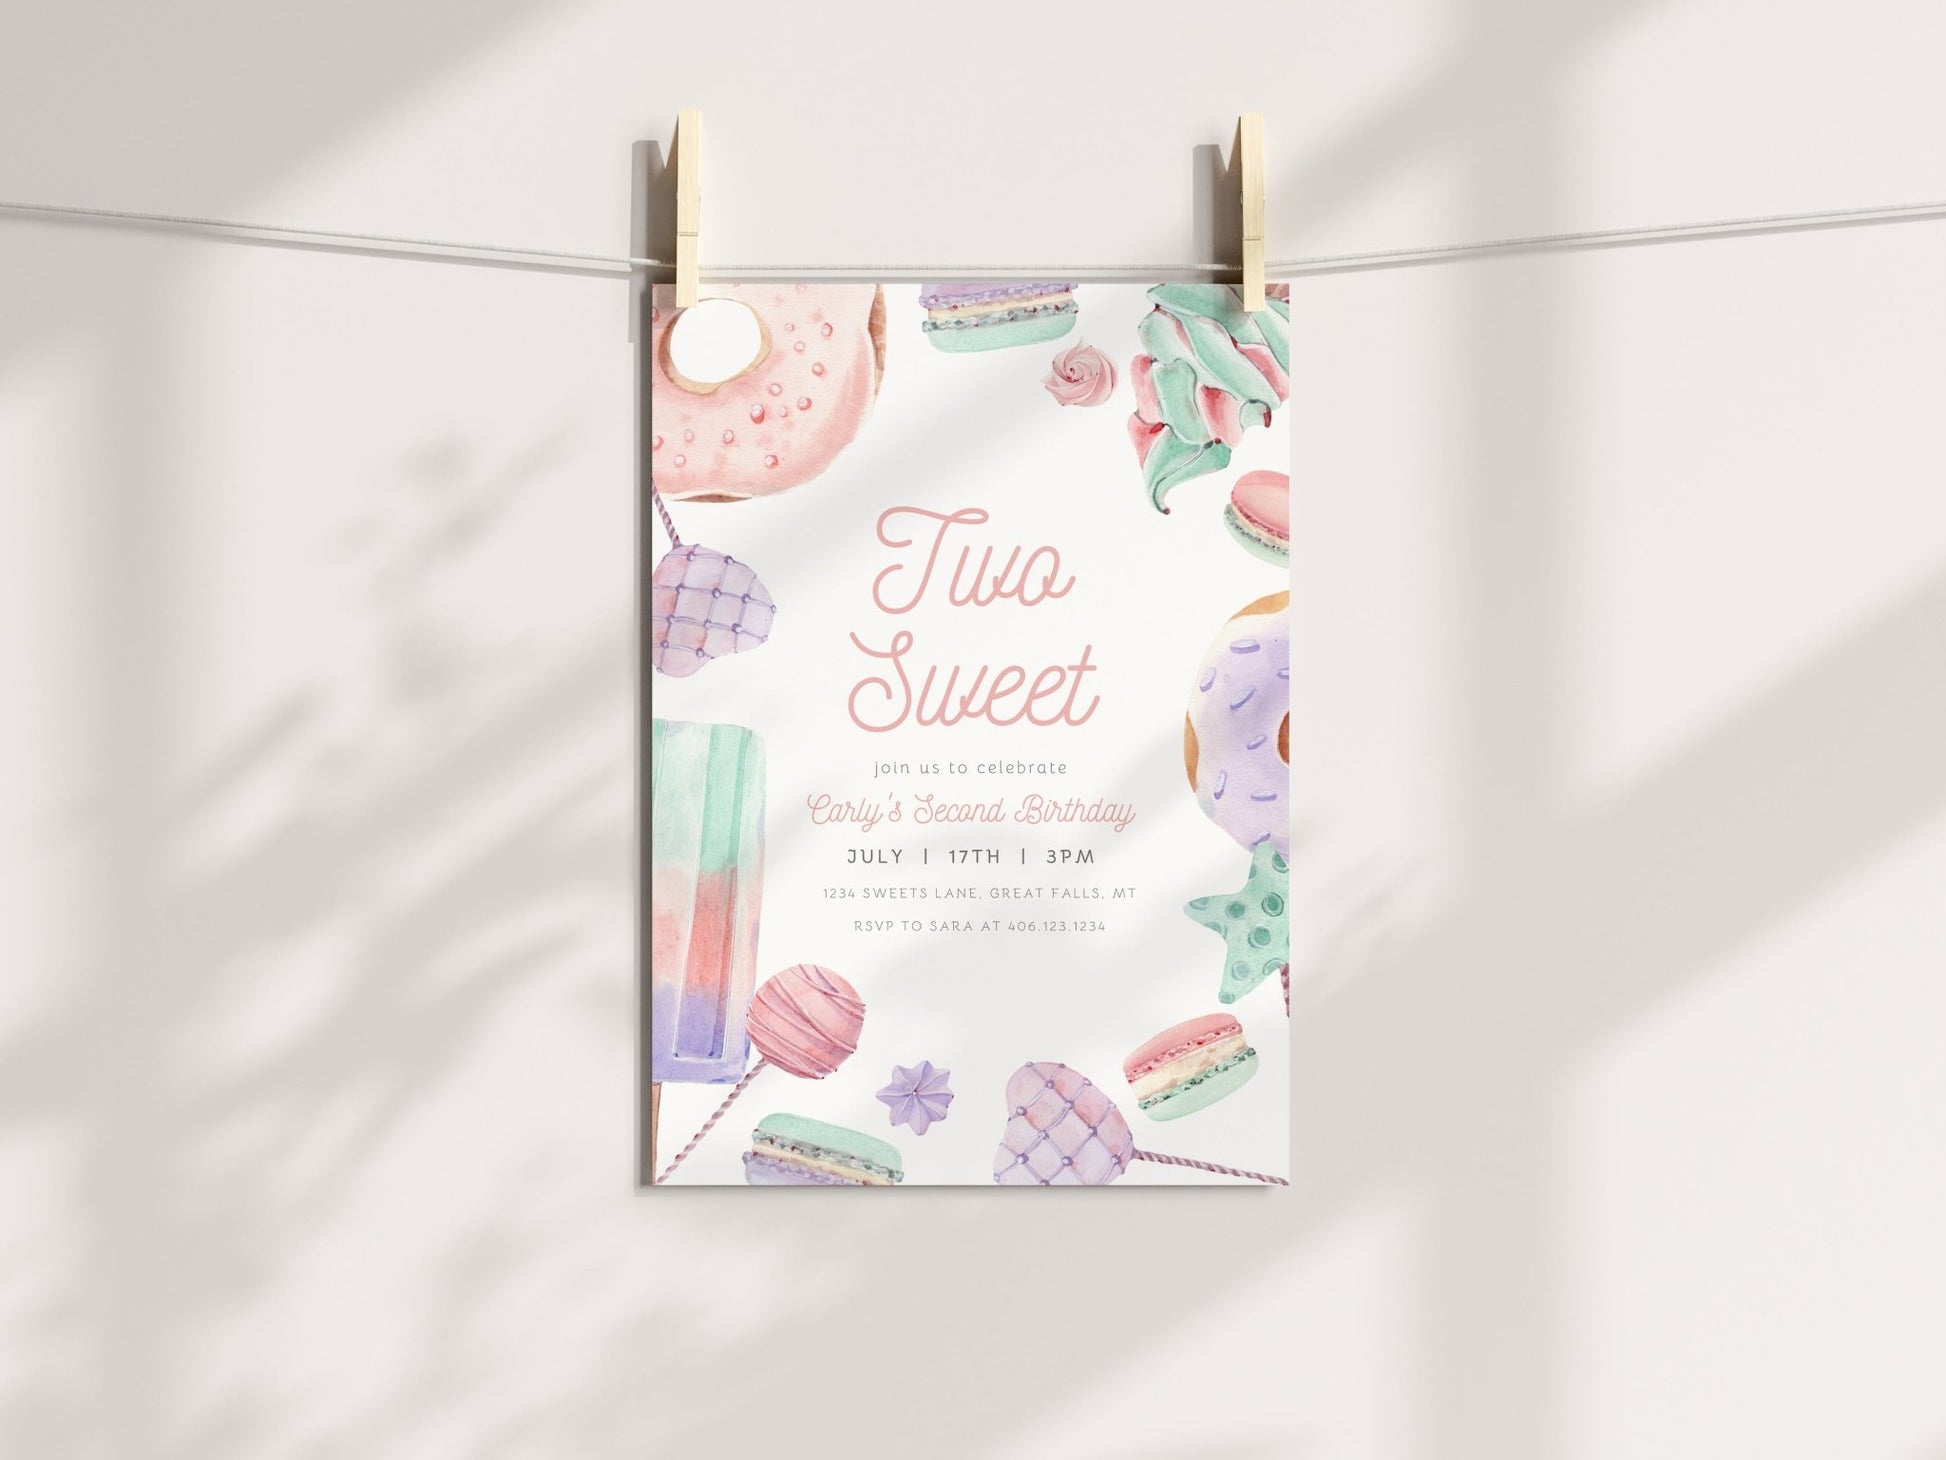 Two Sweet Birthday Party Invitation Printable - Pastels - High Peaks Studios